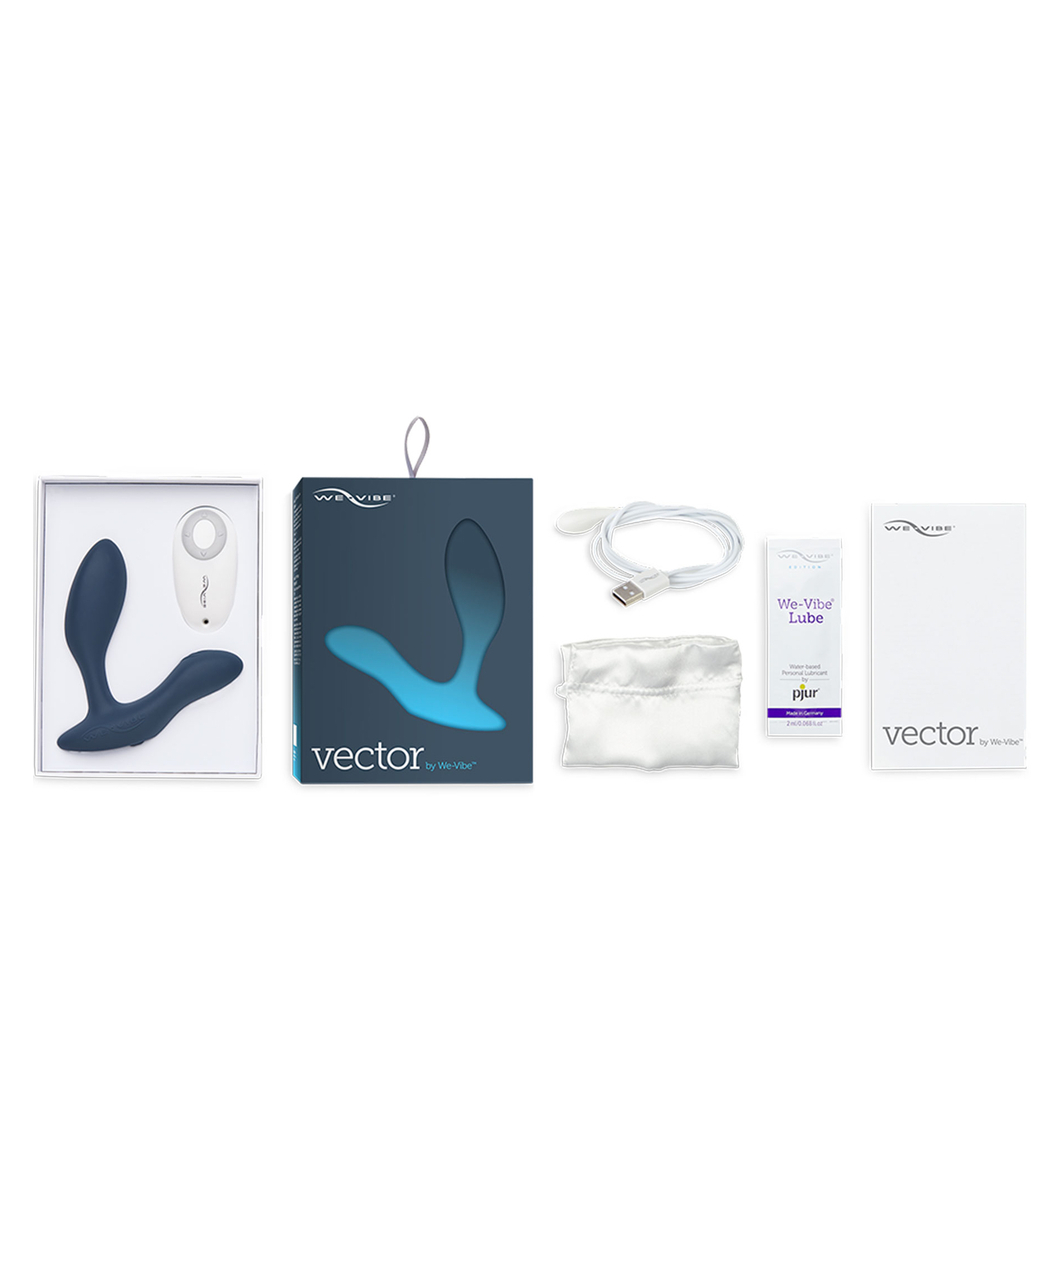 We-Vibe Vector prostate stimulator